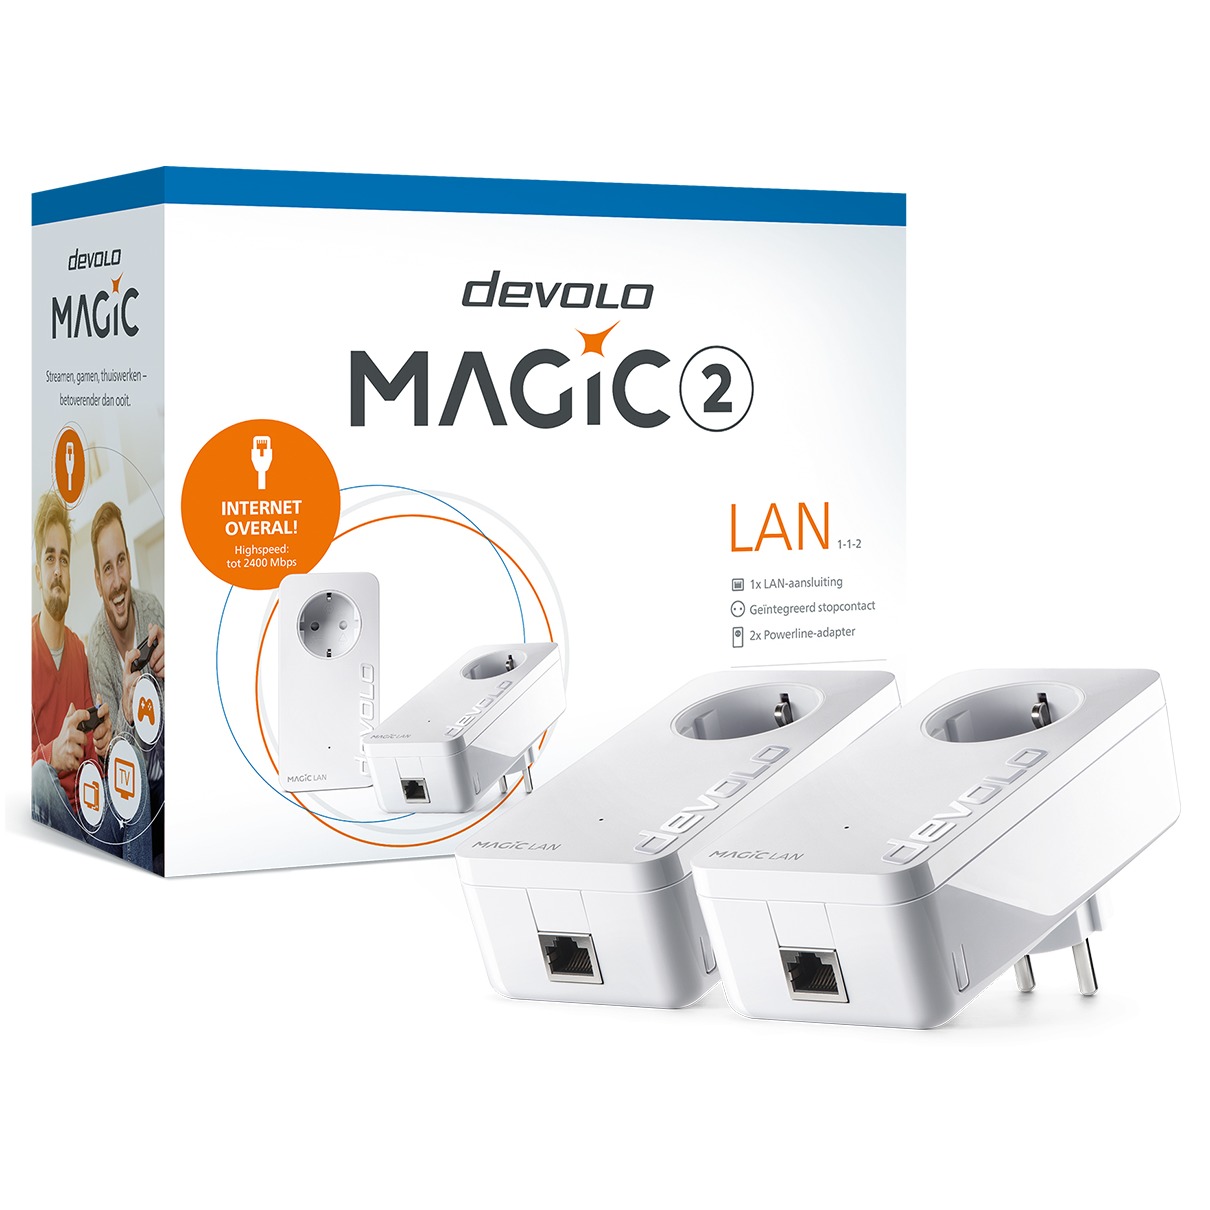 Telefoonleader - Devolo Magic 2 LAN Starter Kit